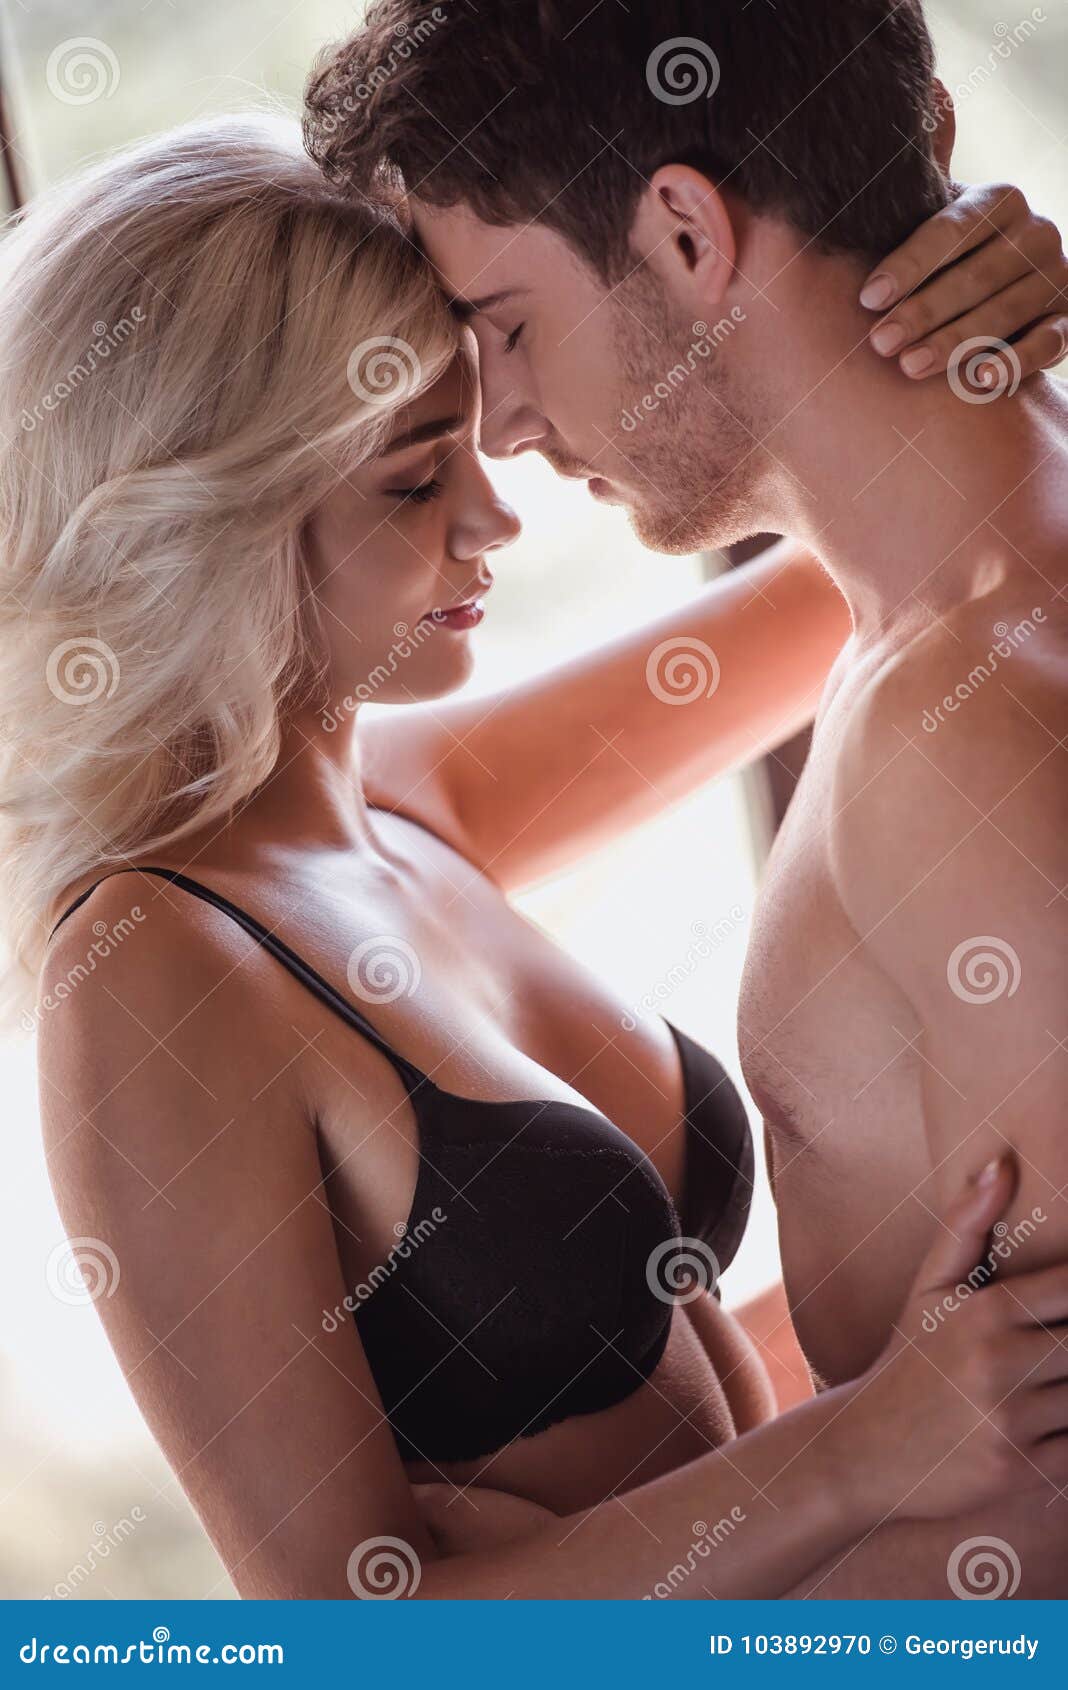 Couple having sex stock photo